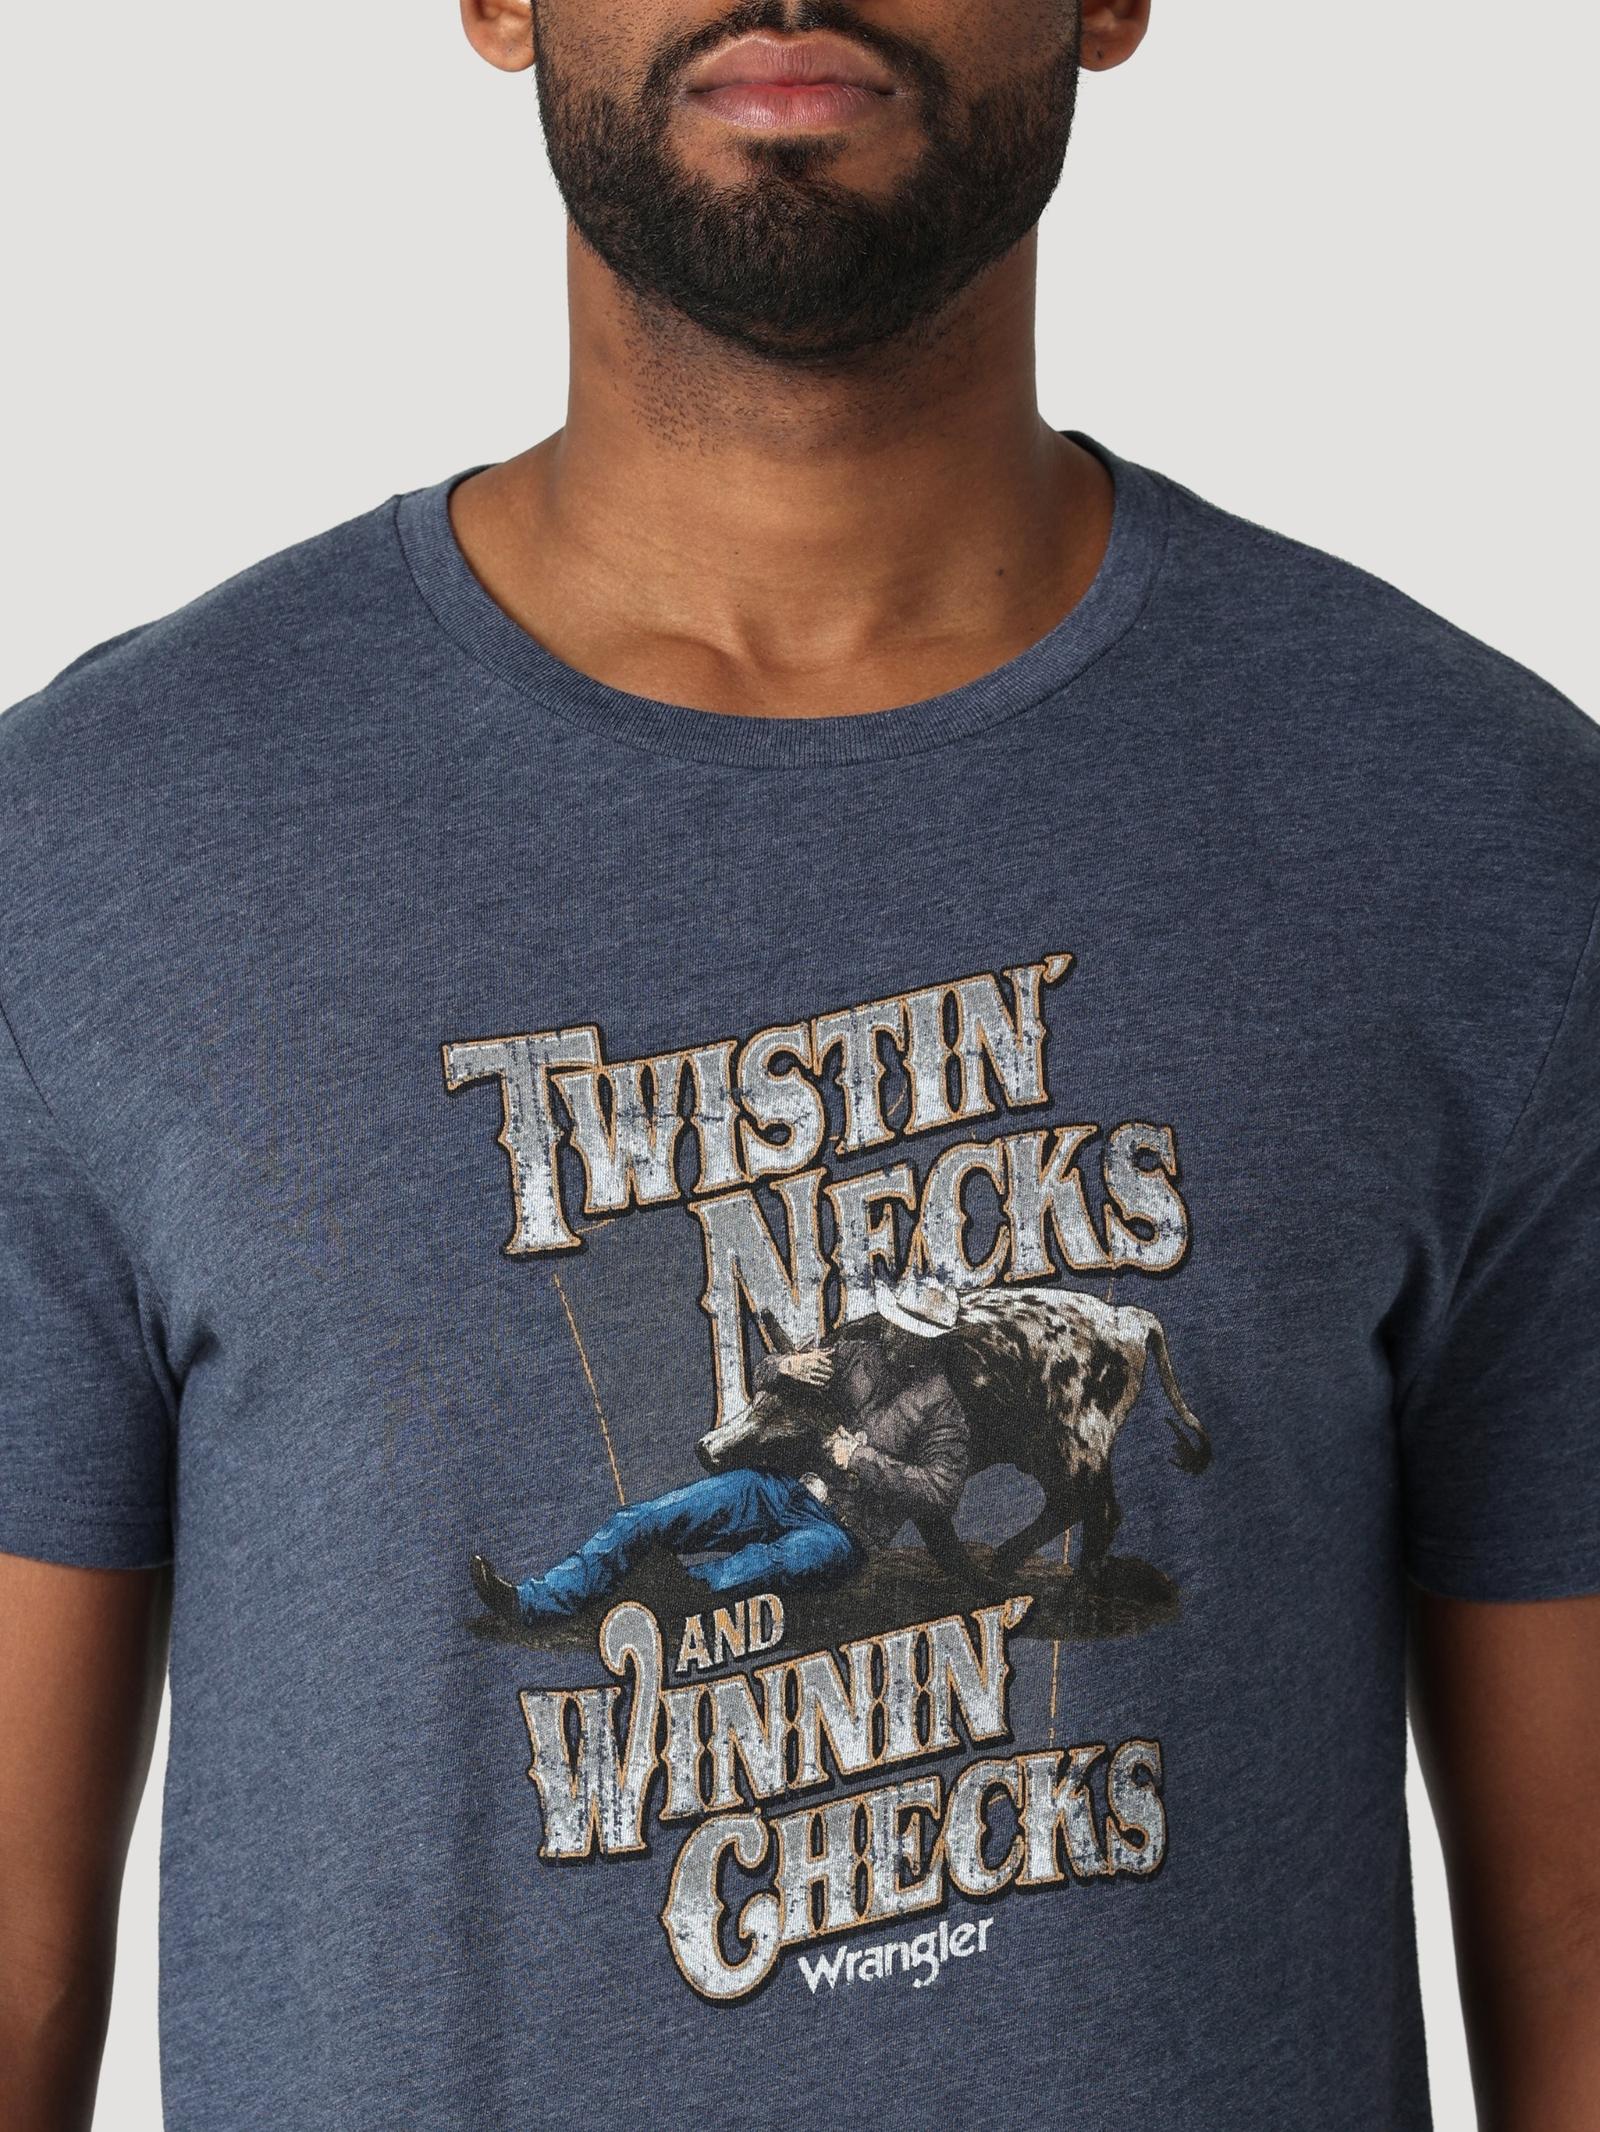 Wrangler Men's "Twistin' Necks and Winnin' Checks" Graphic T-shirt